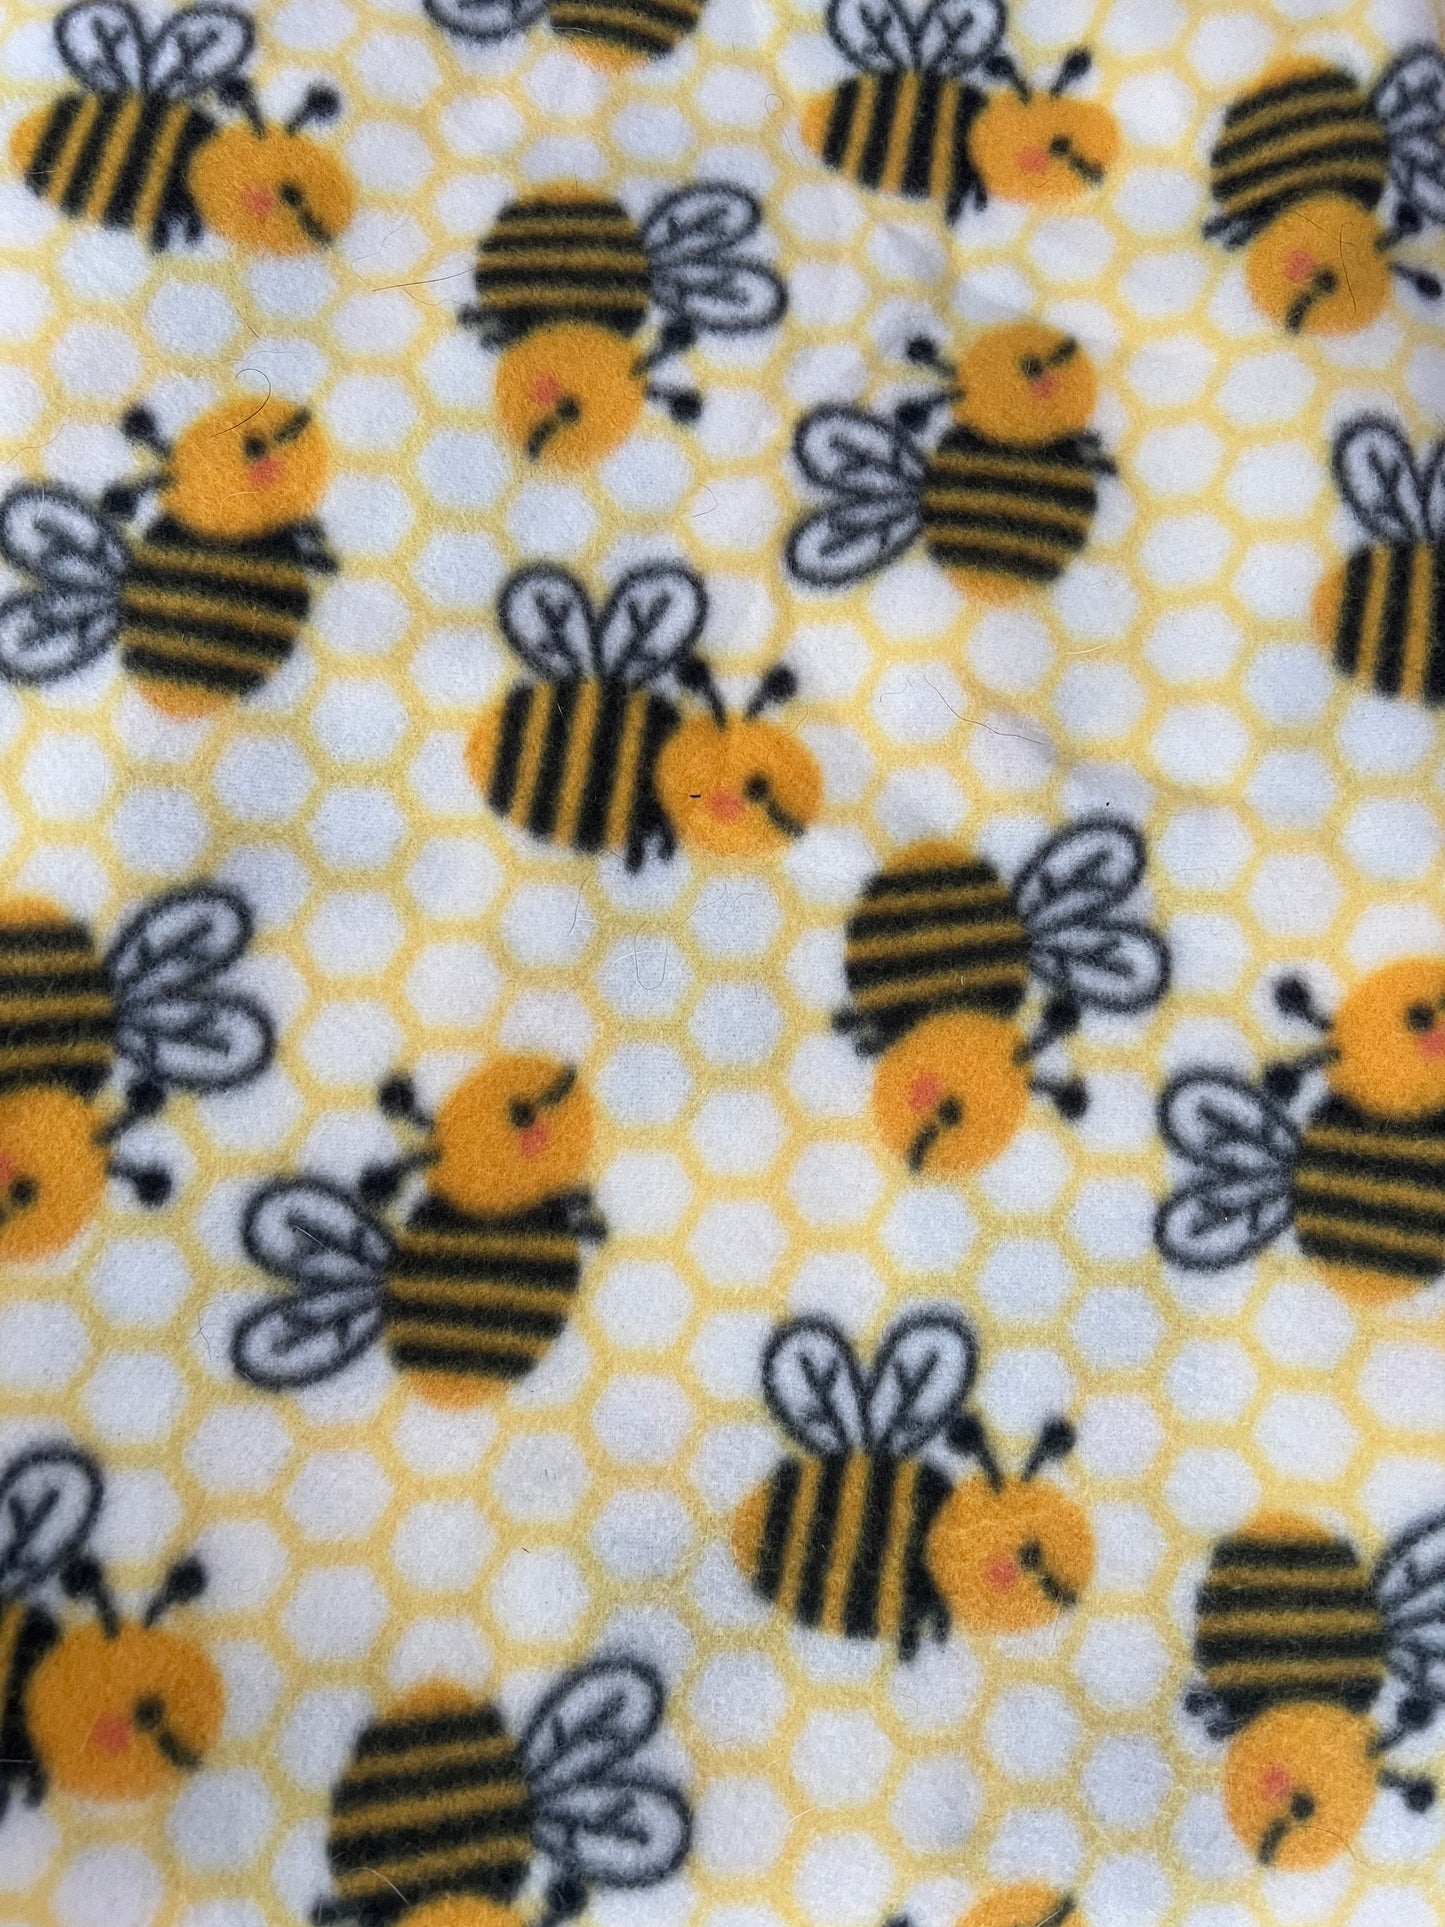 Busy bees pattern custom dog sweatshirt